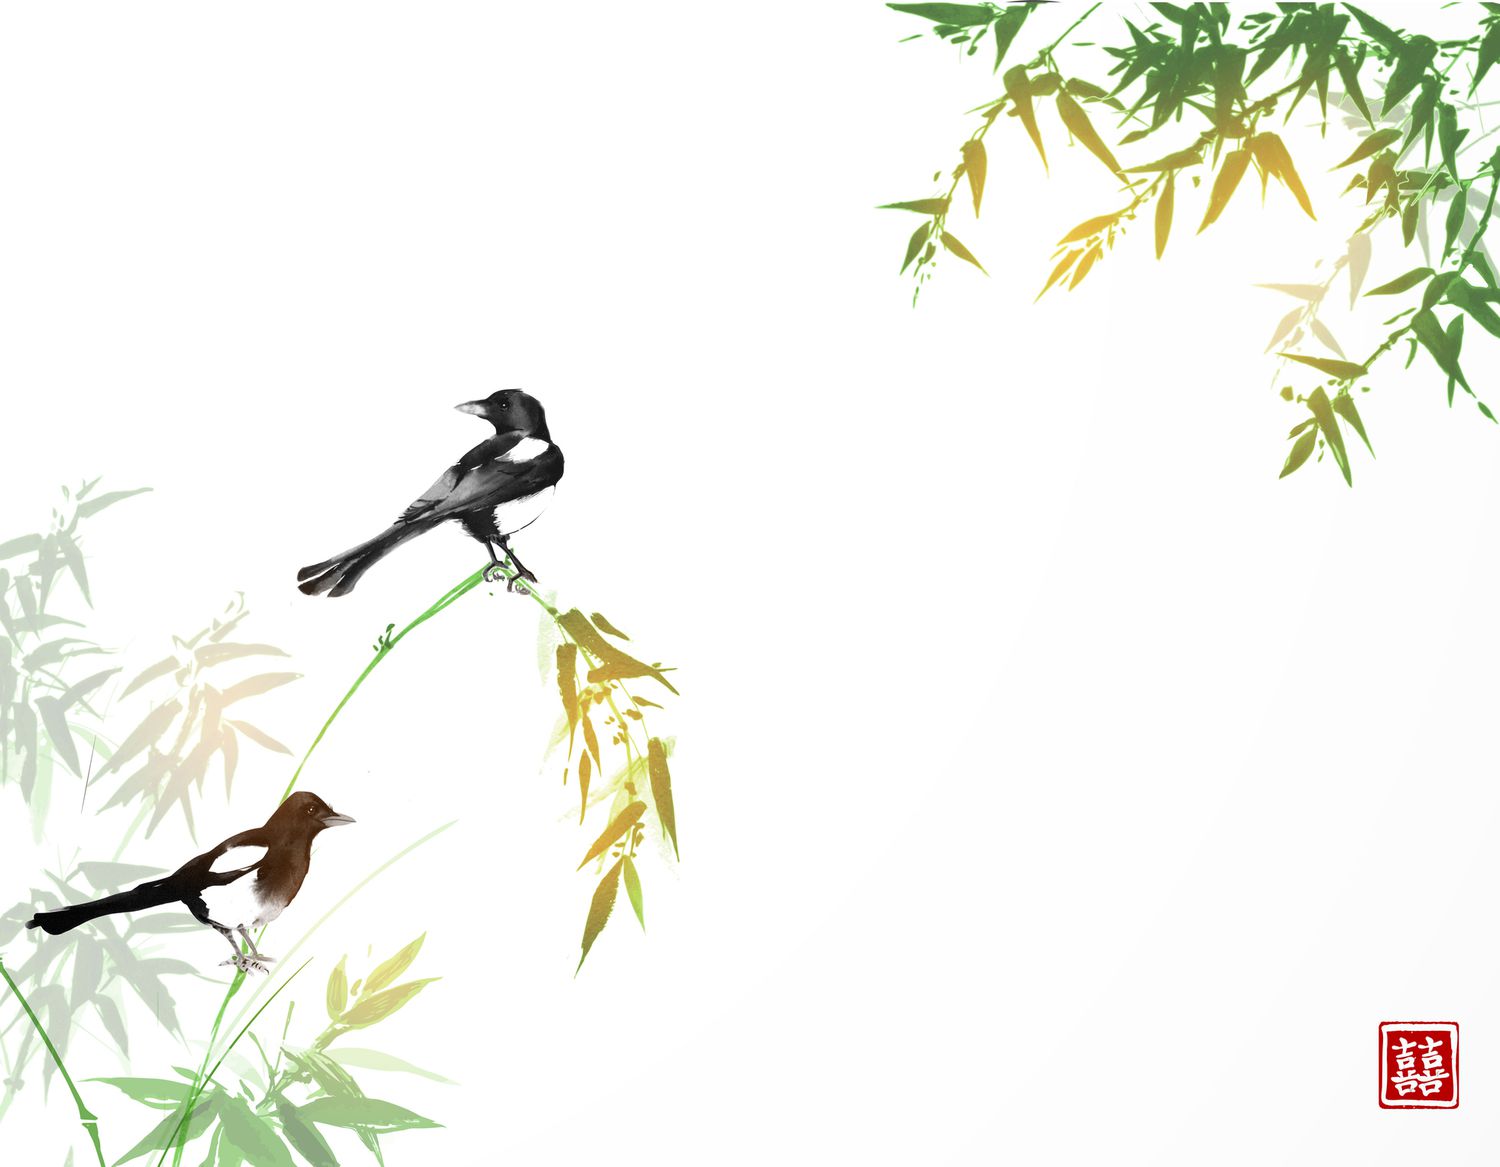 Árvores de bambu e dois pássaros pegas. Pintura tradicional oriental com tinta sumi-e, u-sin, go-hua. Hieróglifo - dupla sorte